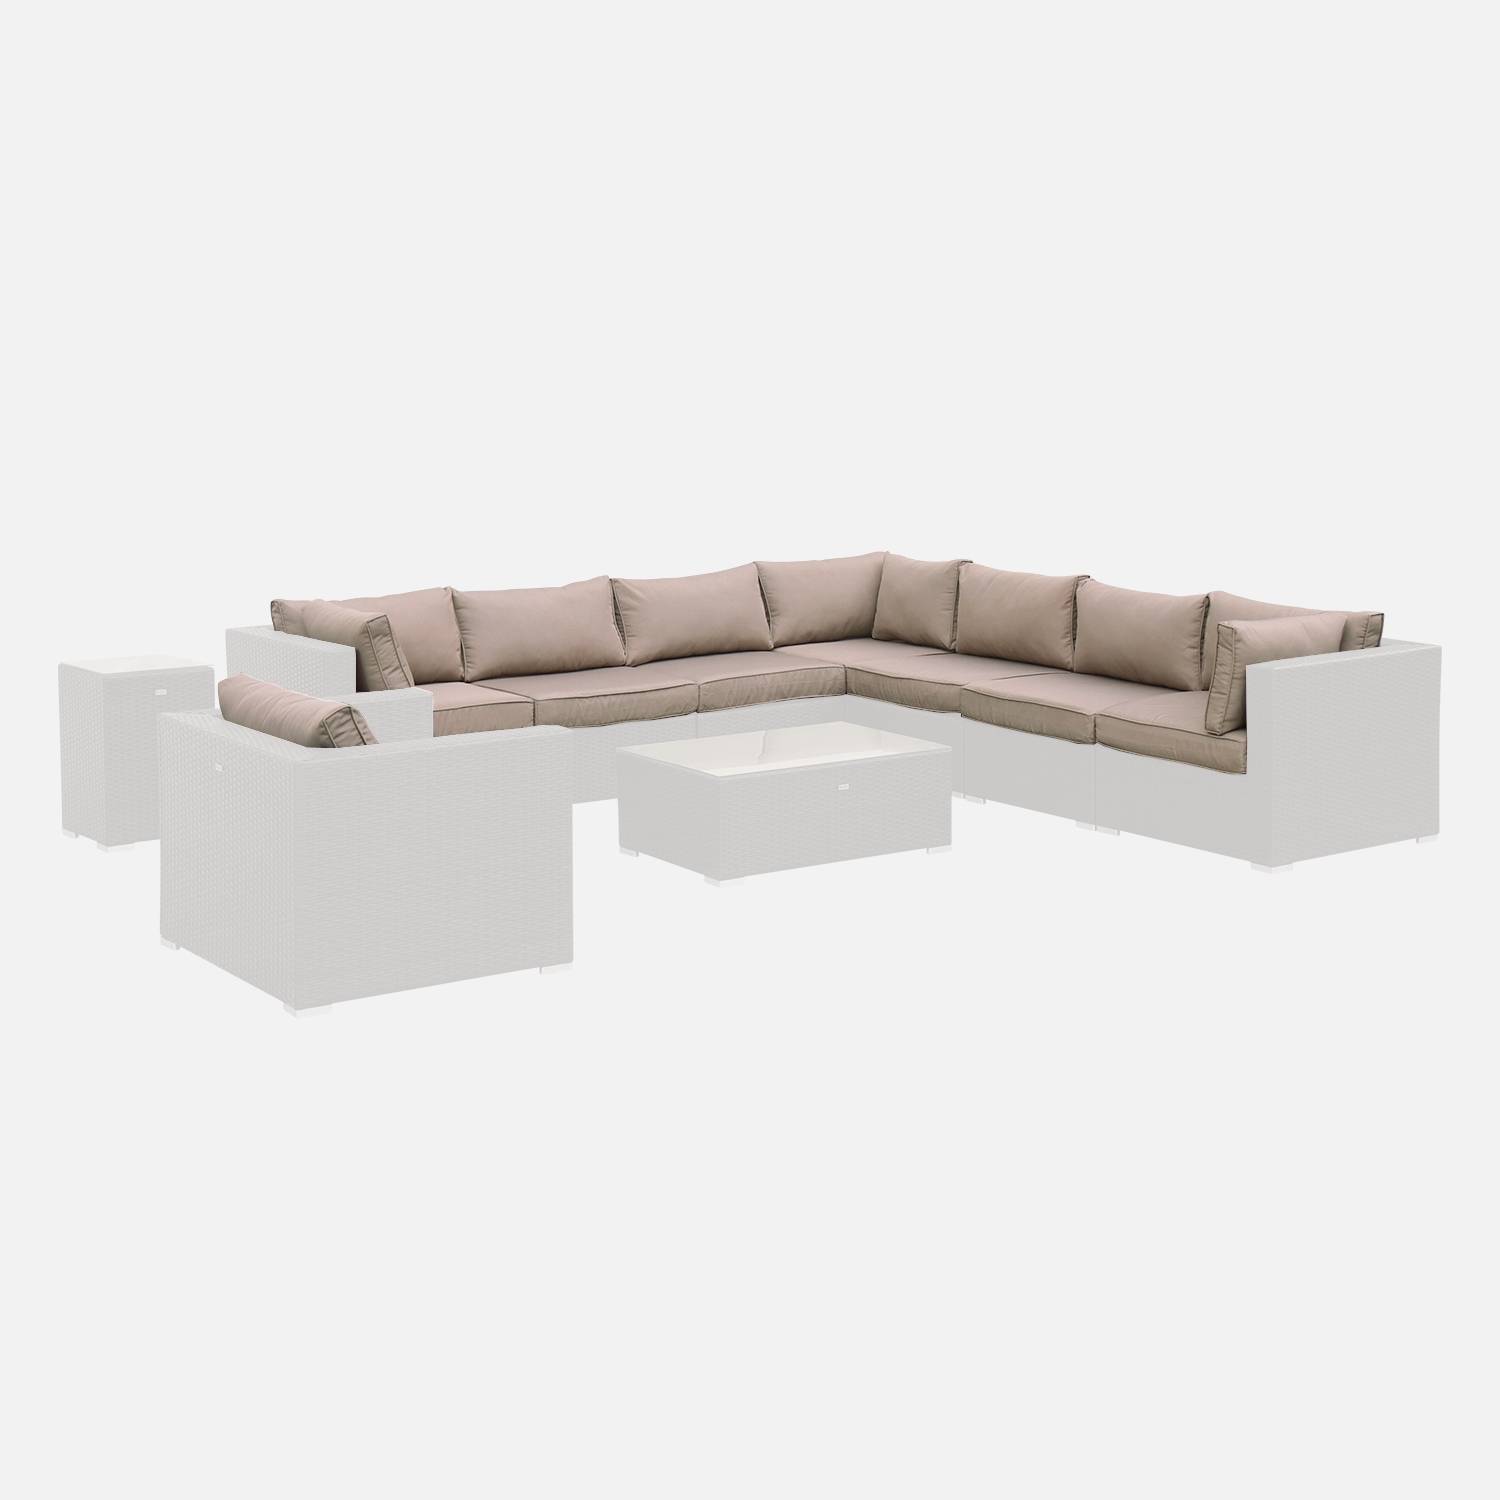 Complete set of cushion covers - Beige-Brown | sweeek